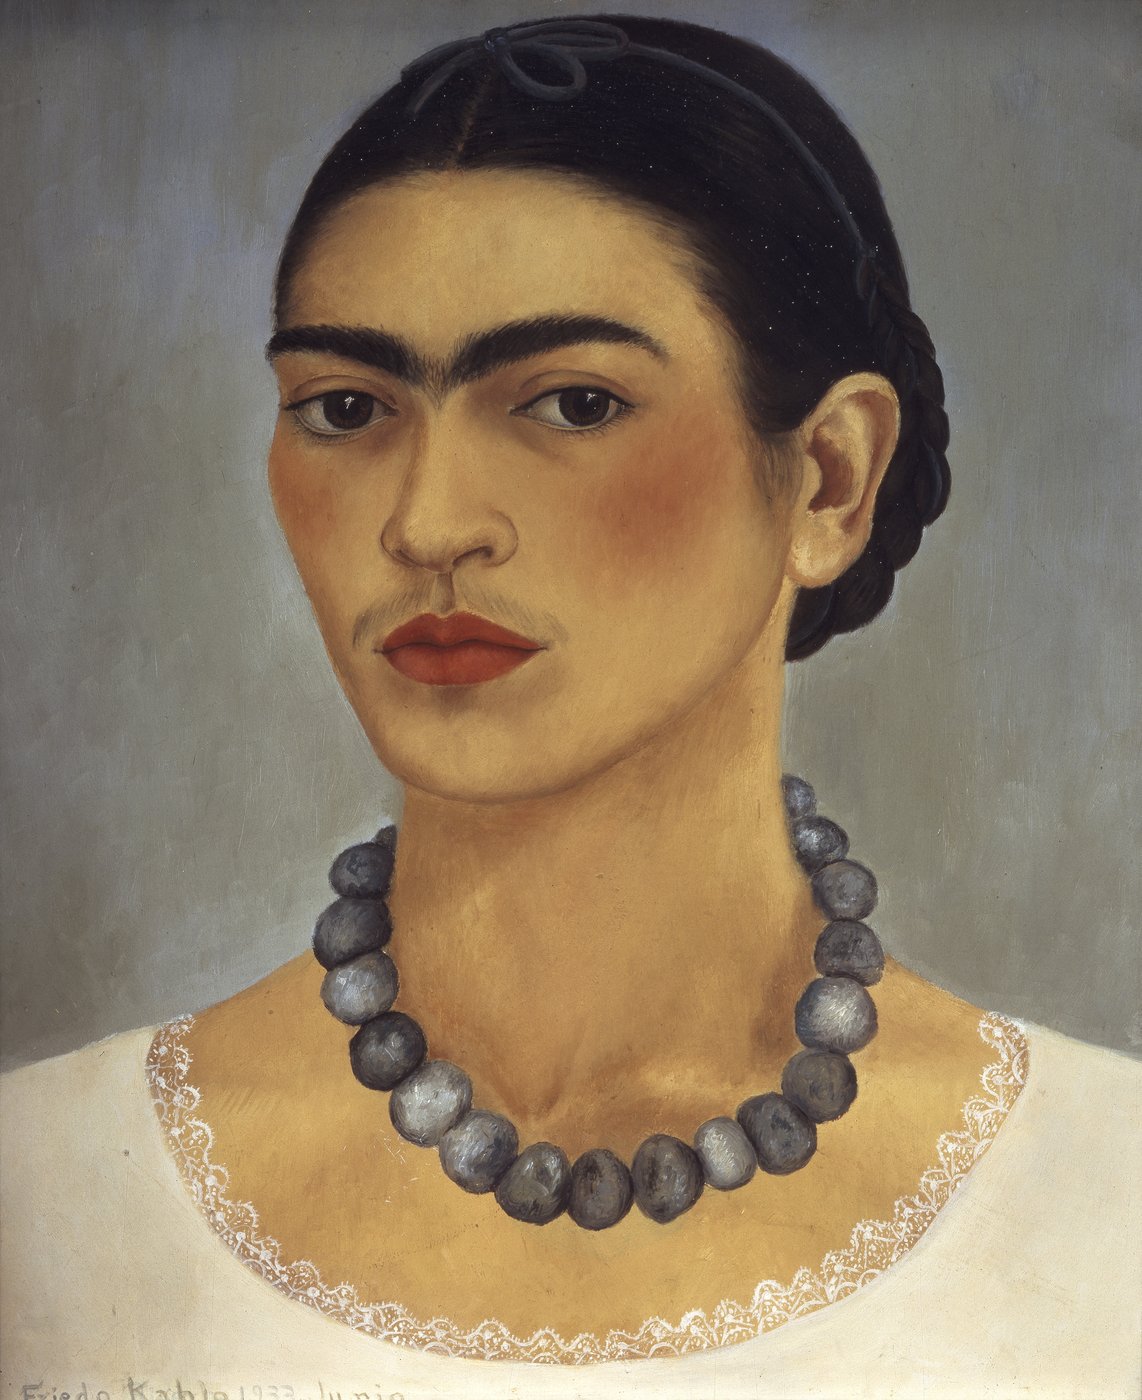 Frida Kahlo pendant a nice memory of a great artist.